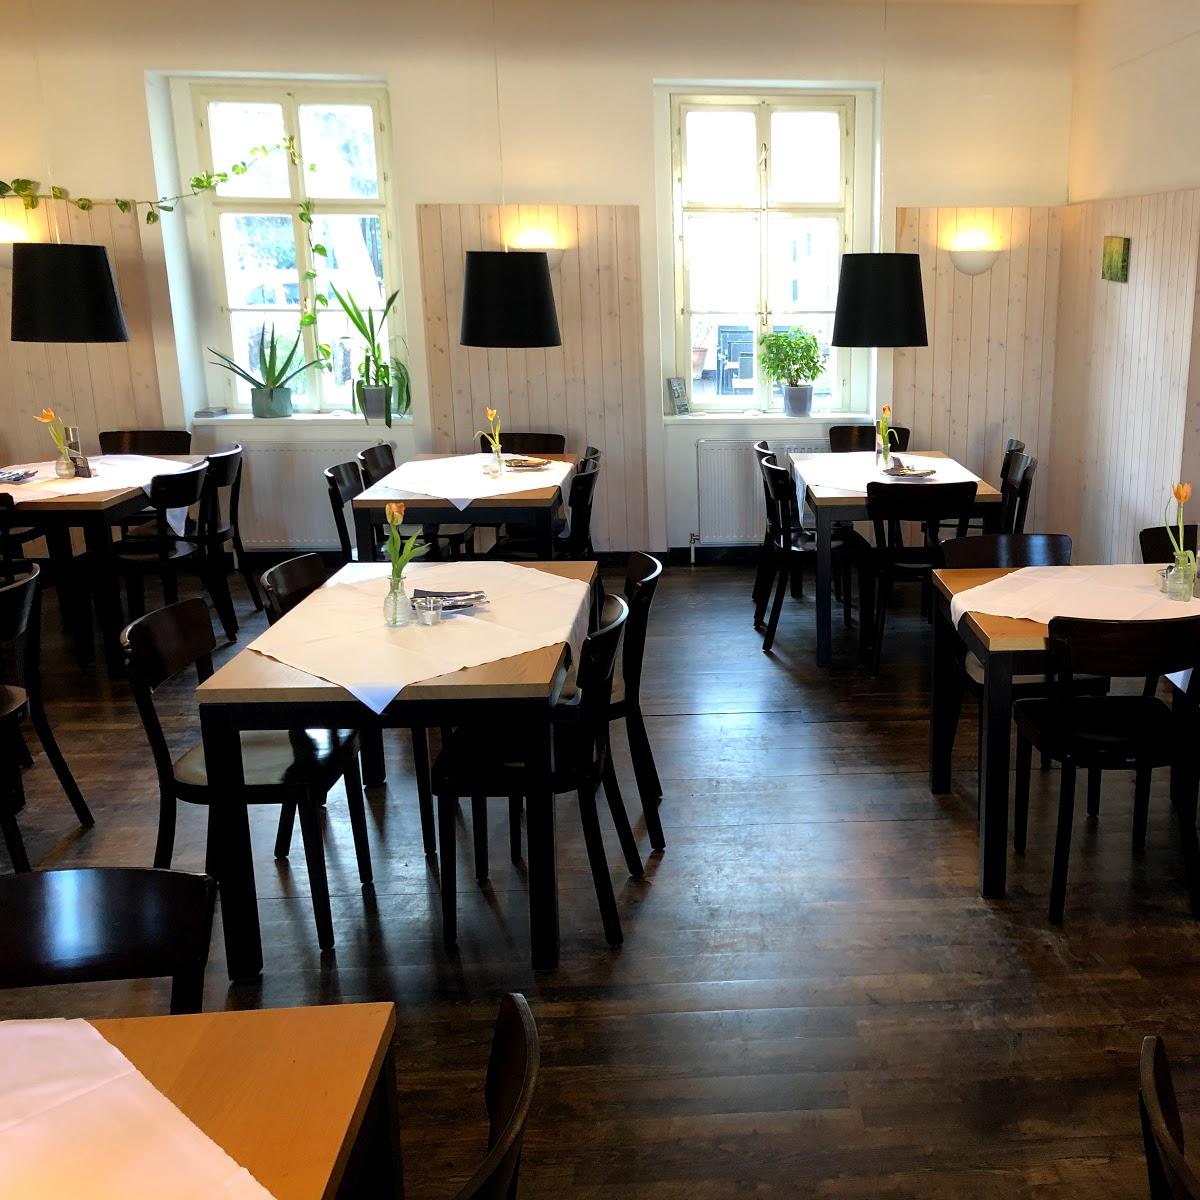 Restaurant "Schlosswirt" in Bisamberg